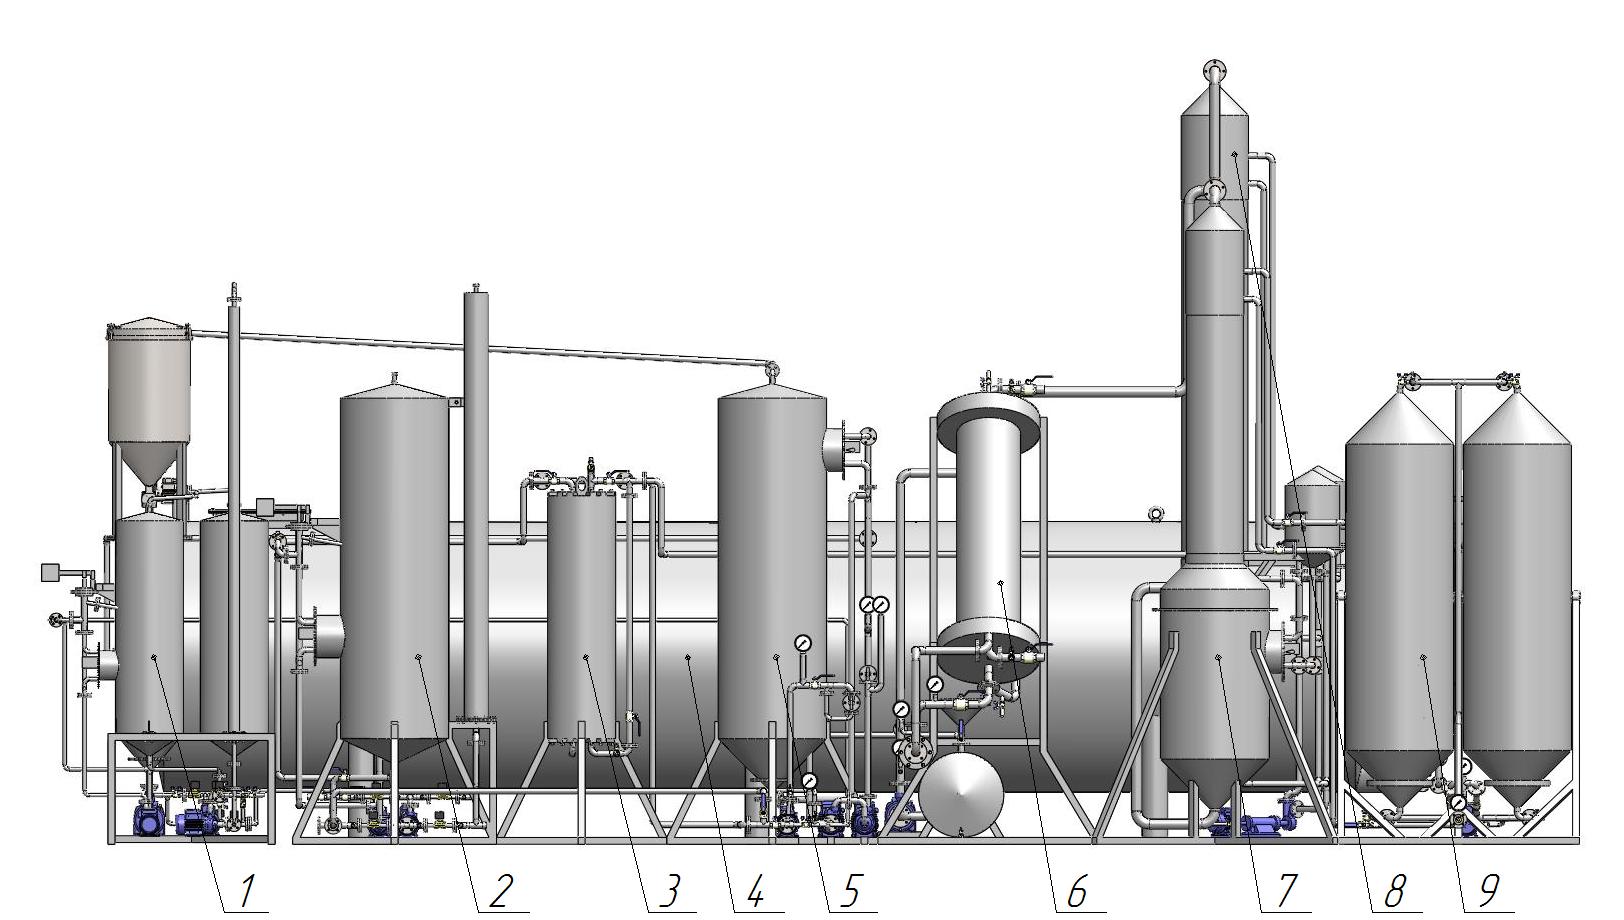 biodiesel production